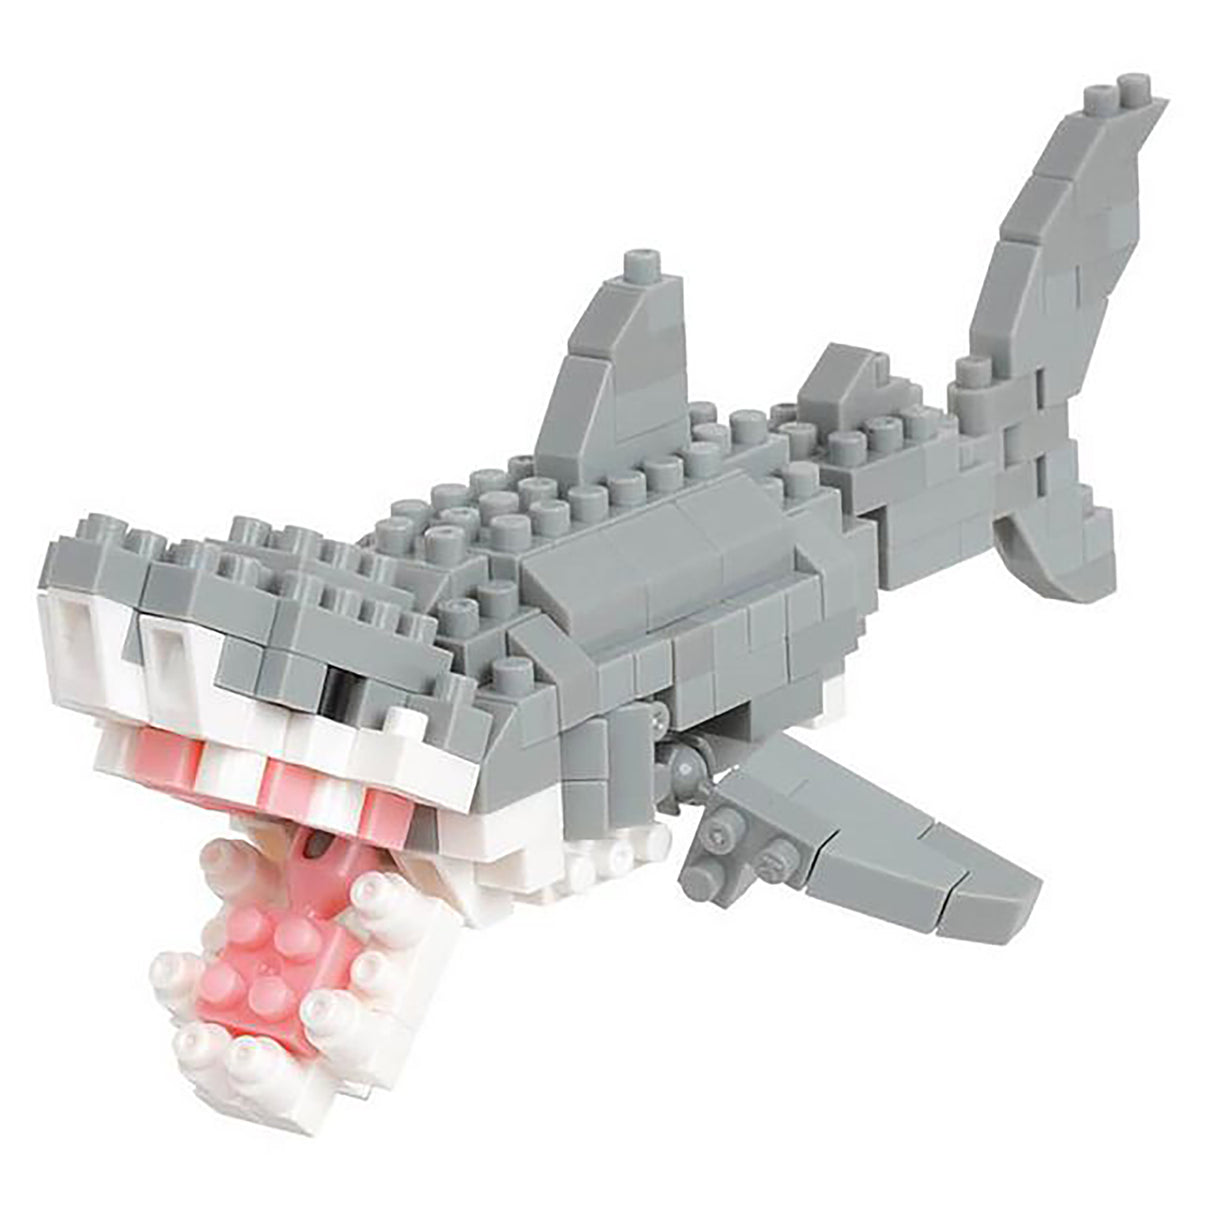 nanoblock Great White Shark 2.0 (190 pieces)